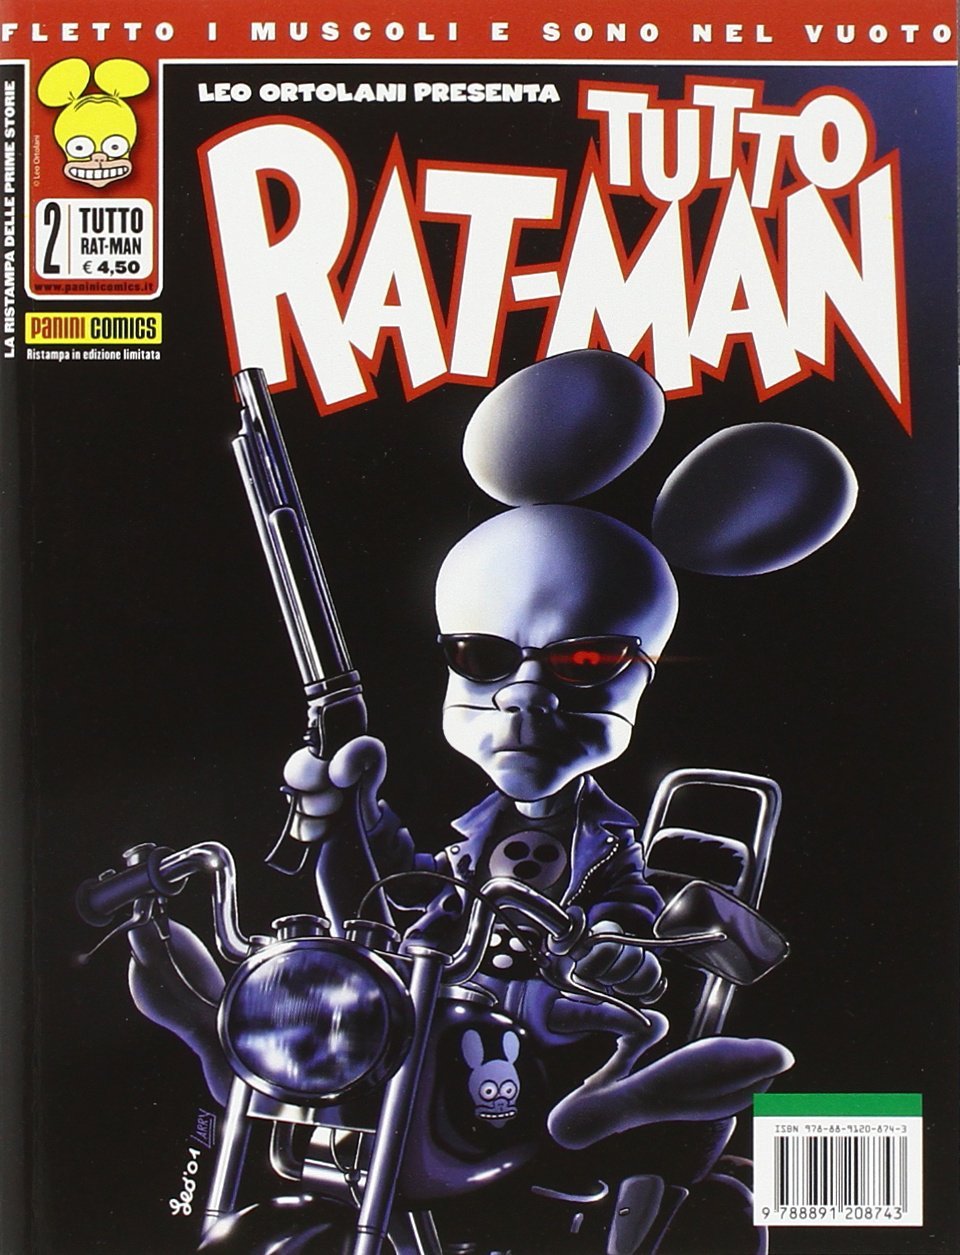 Rat-Man